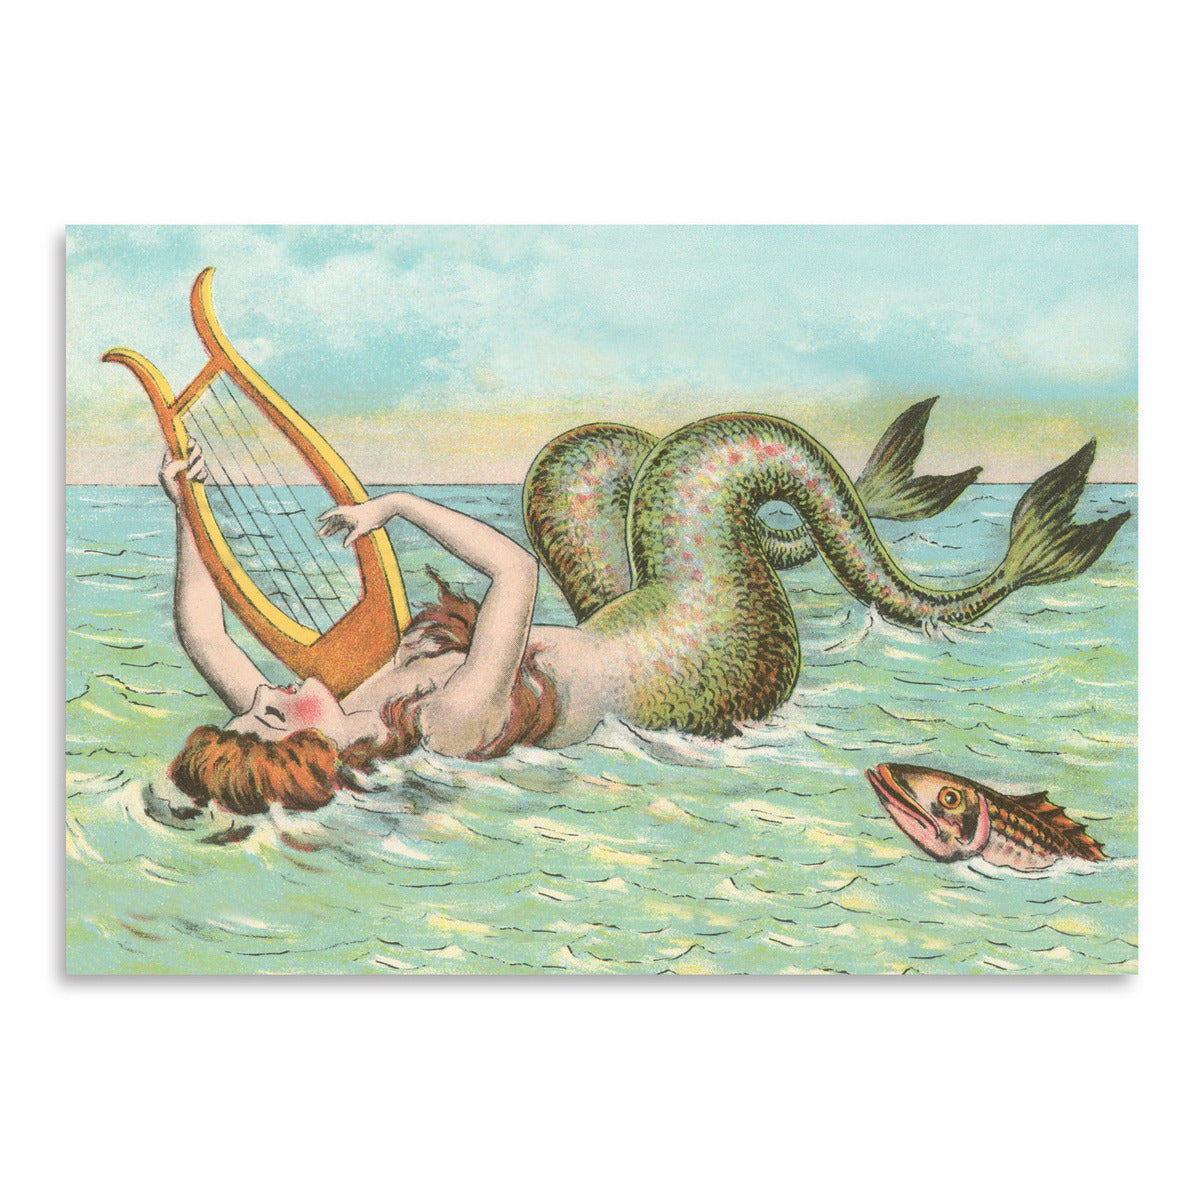 Mermaid Playing Lyre by Found Image Press Art Print - Art Print - Americanflat